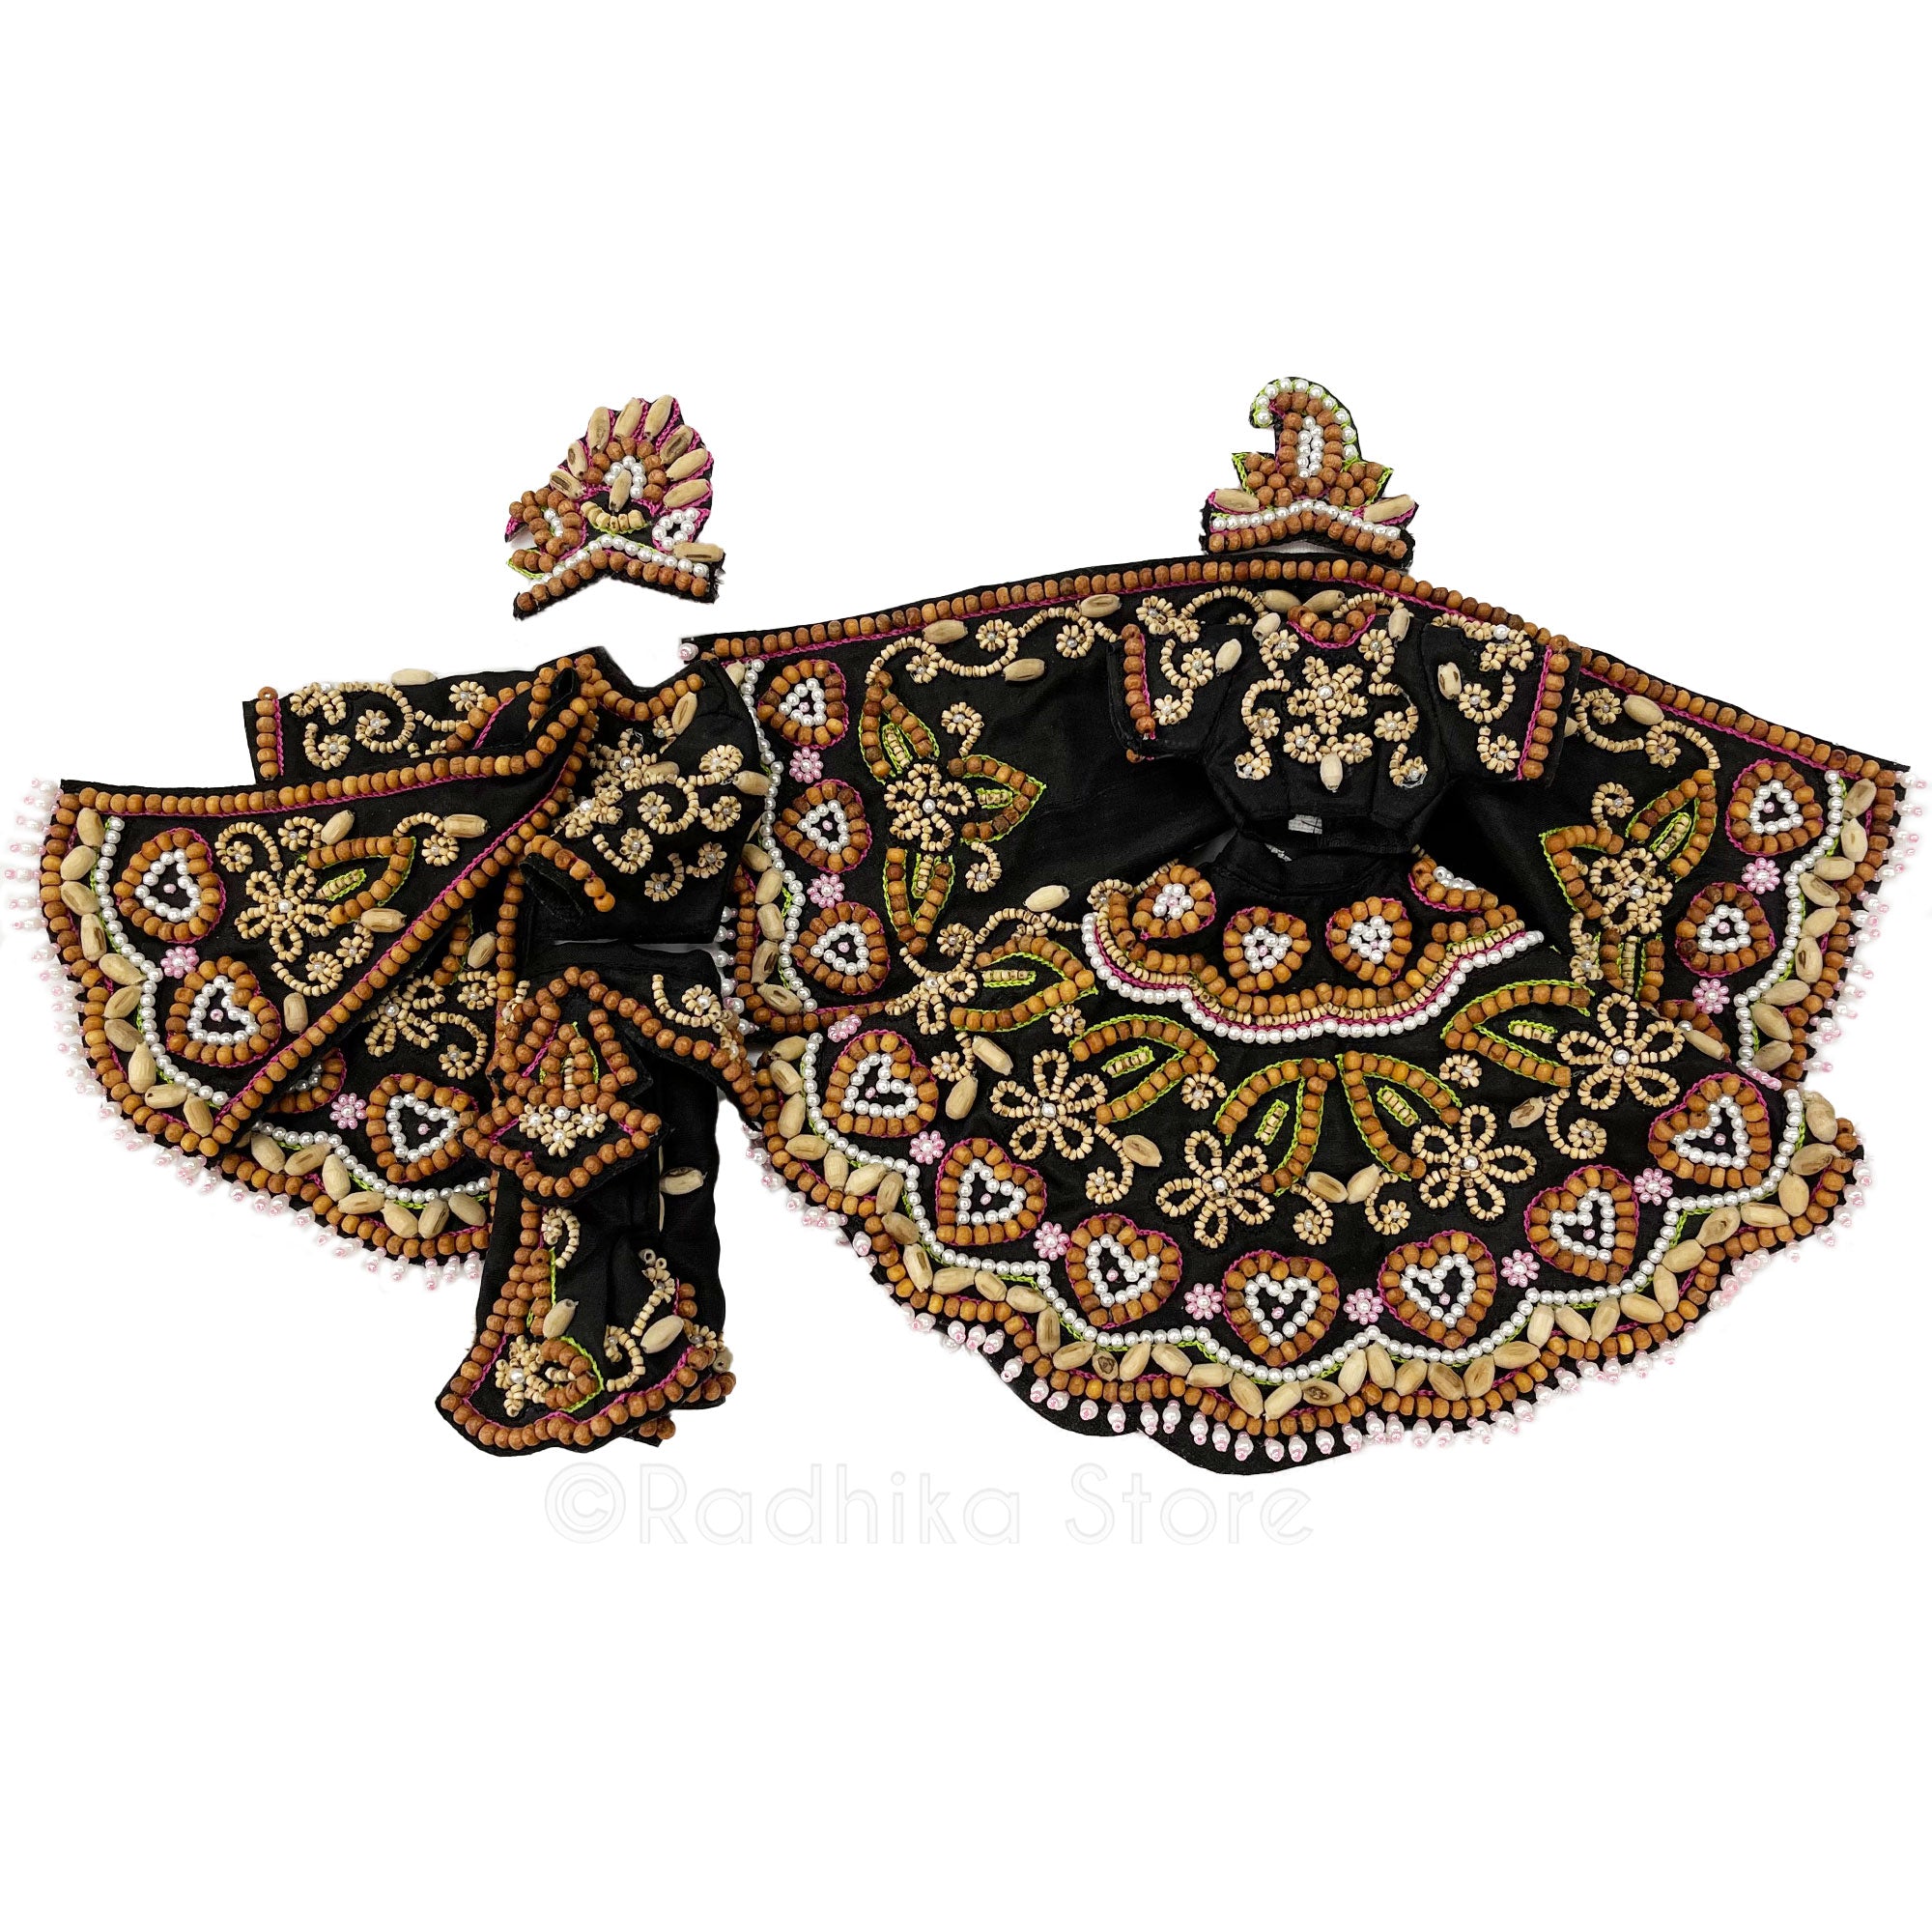 Tulsi Prema - With Sandalwood too - All Silk - Black - Radha Krishna Deity Outfit